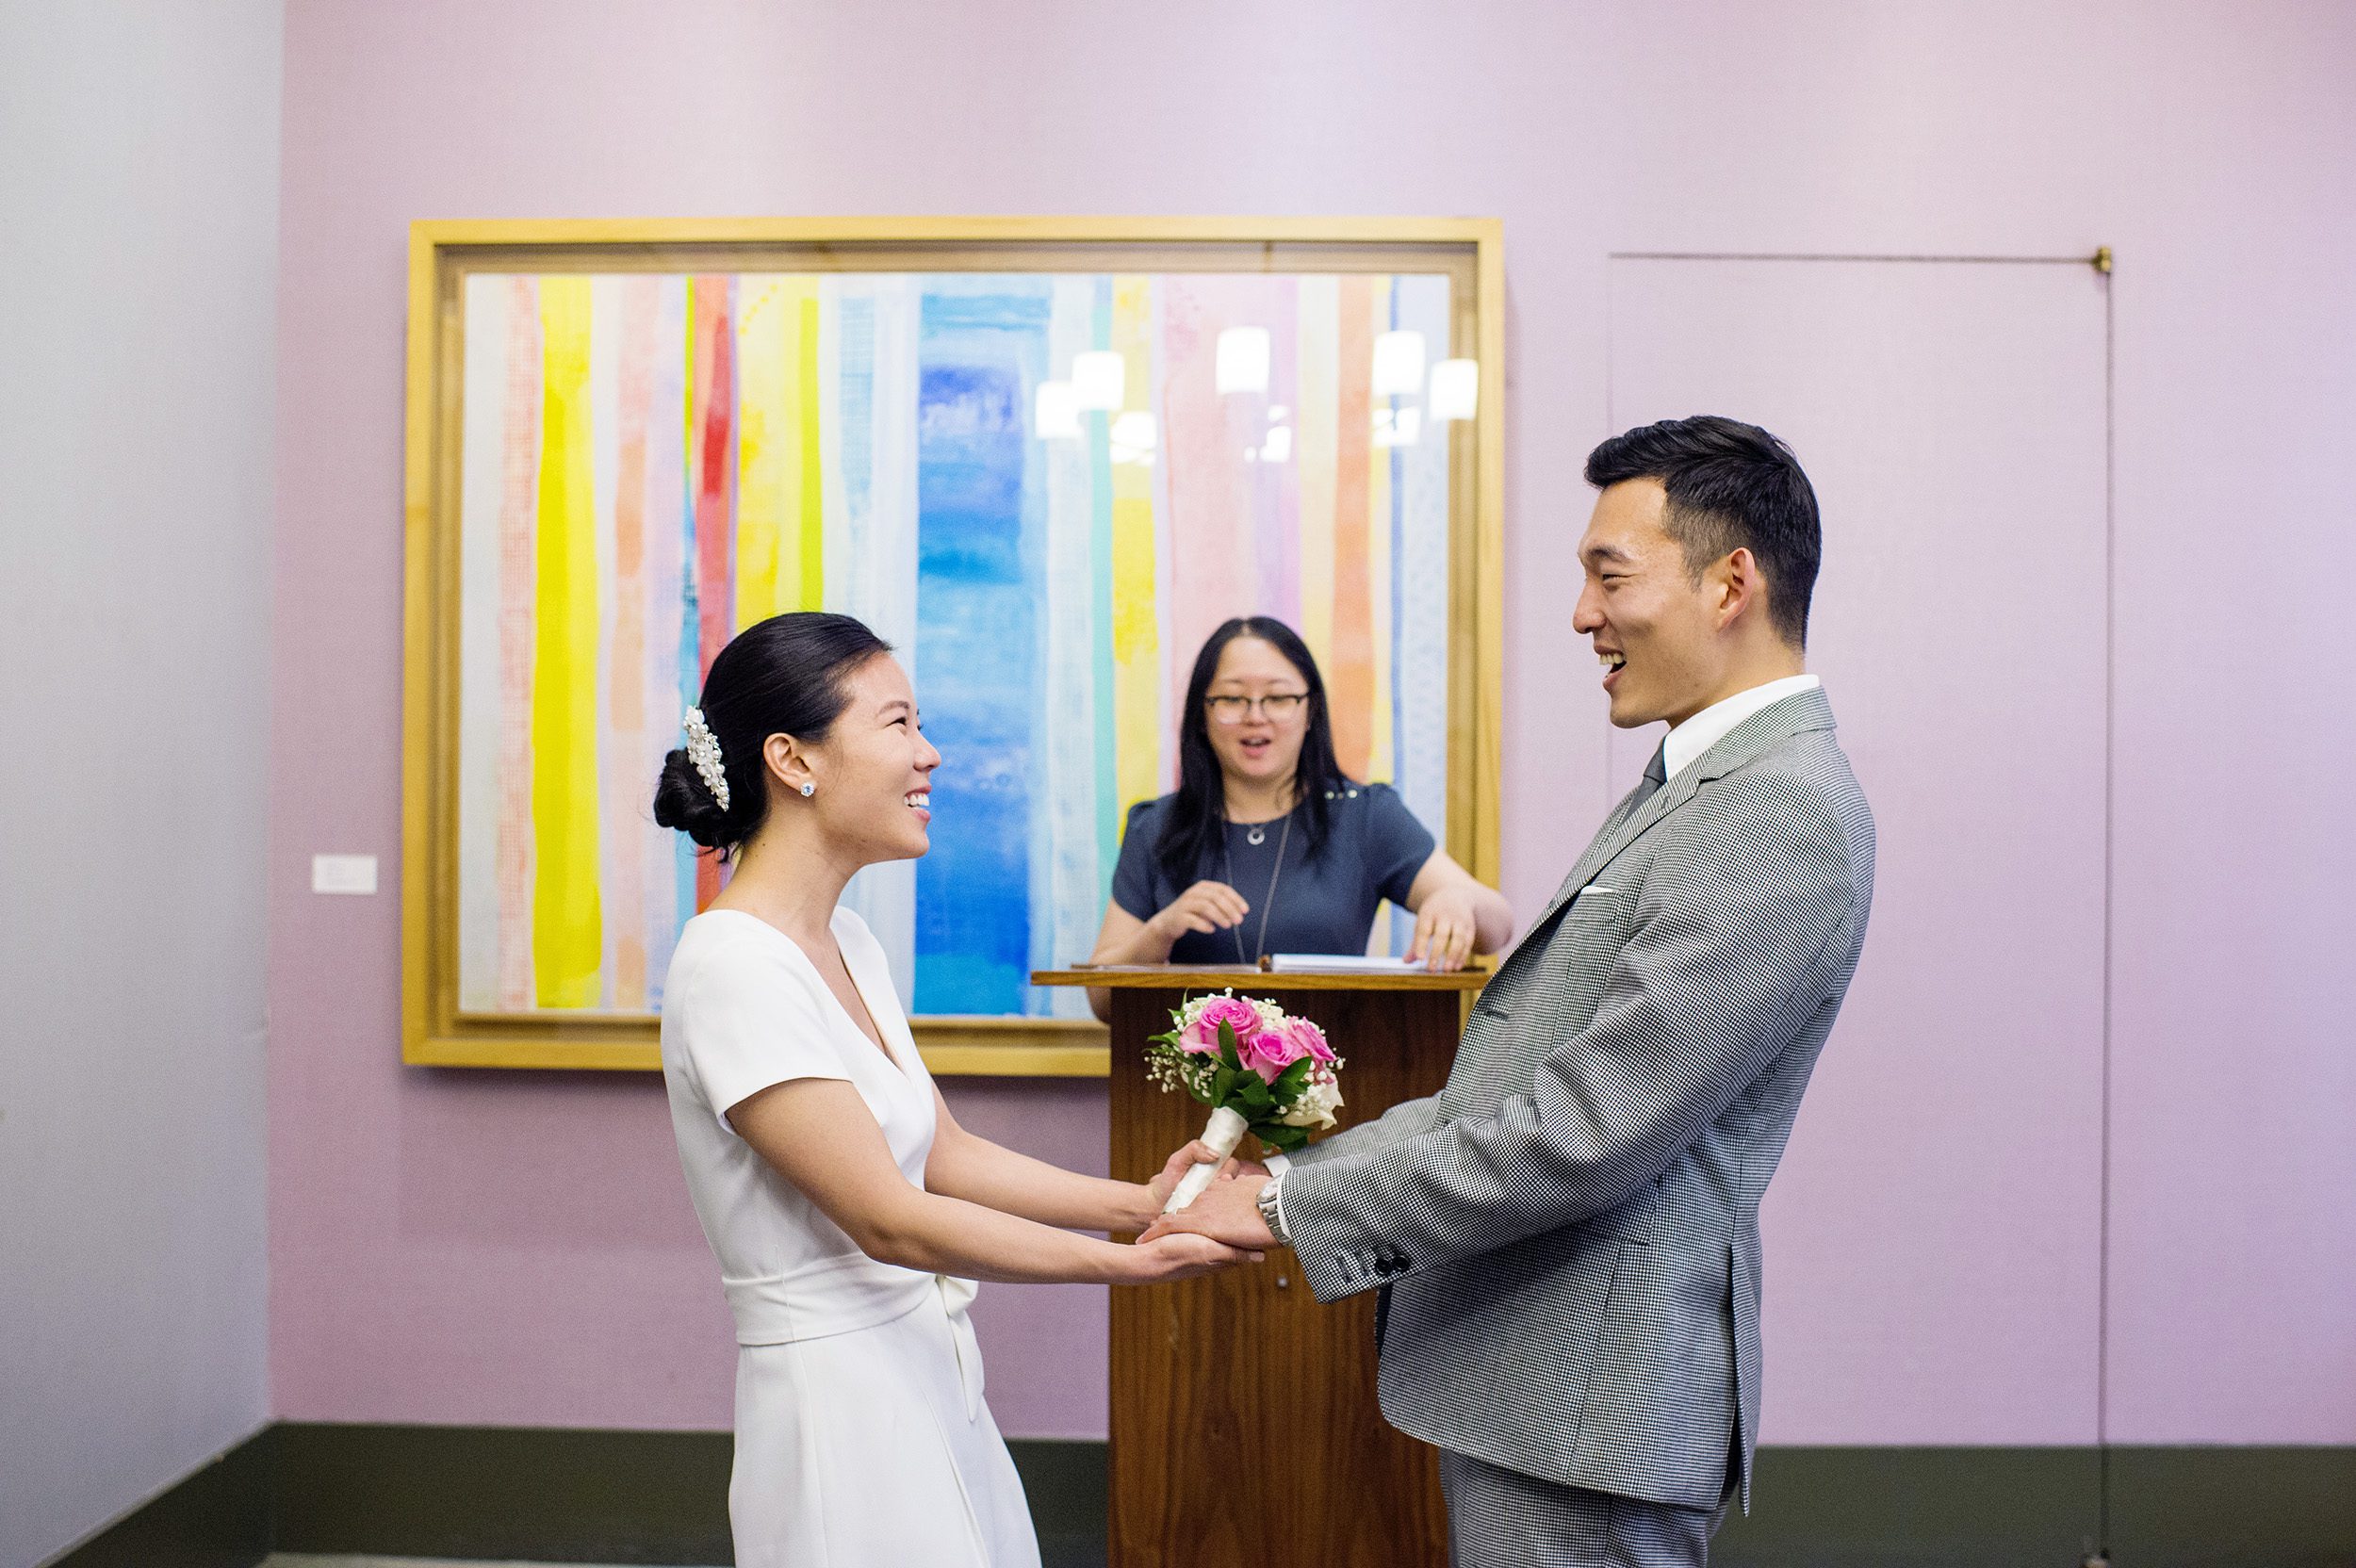 City Hall Wedding Ceremony